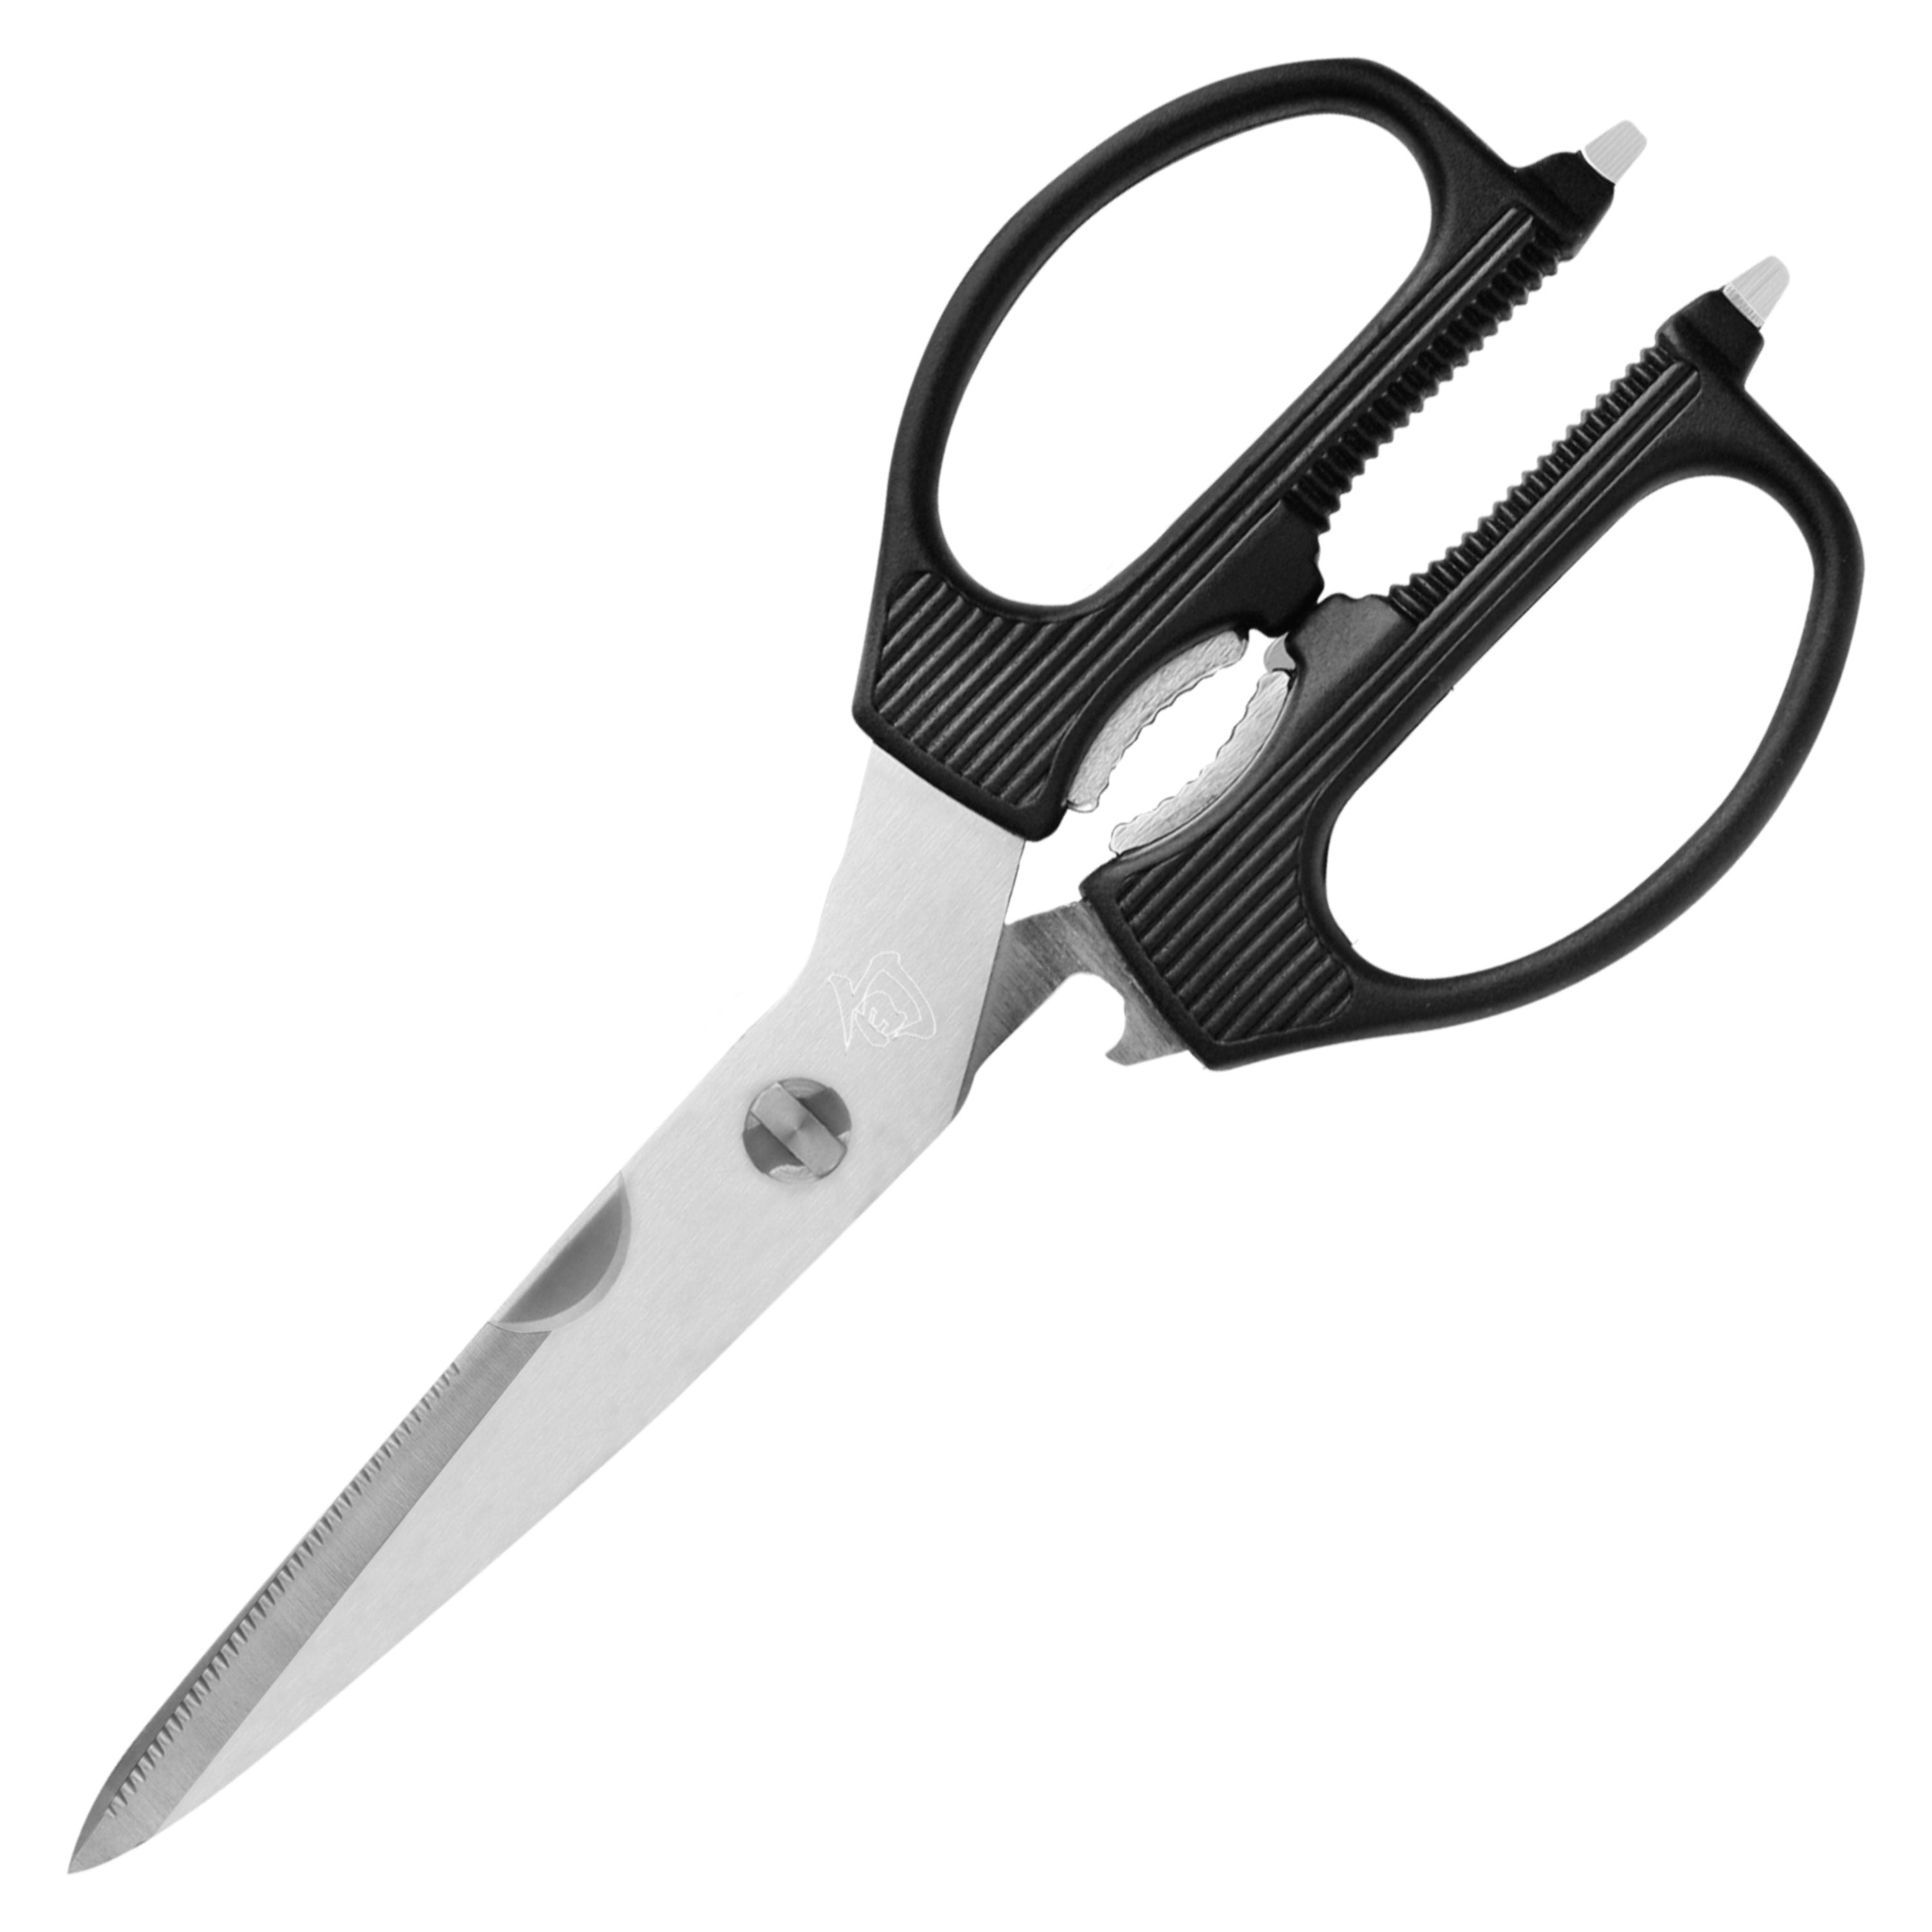 Ultra Sharp Multi Purpose Stainless Steel Kitchen Scissors Premium